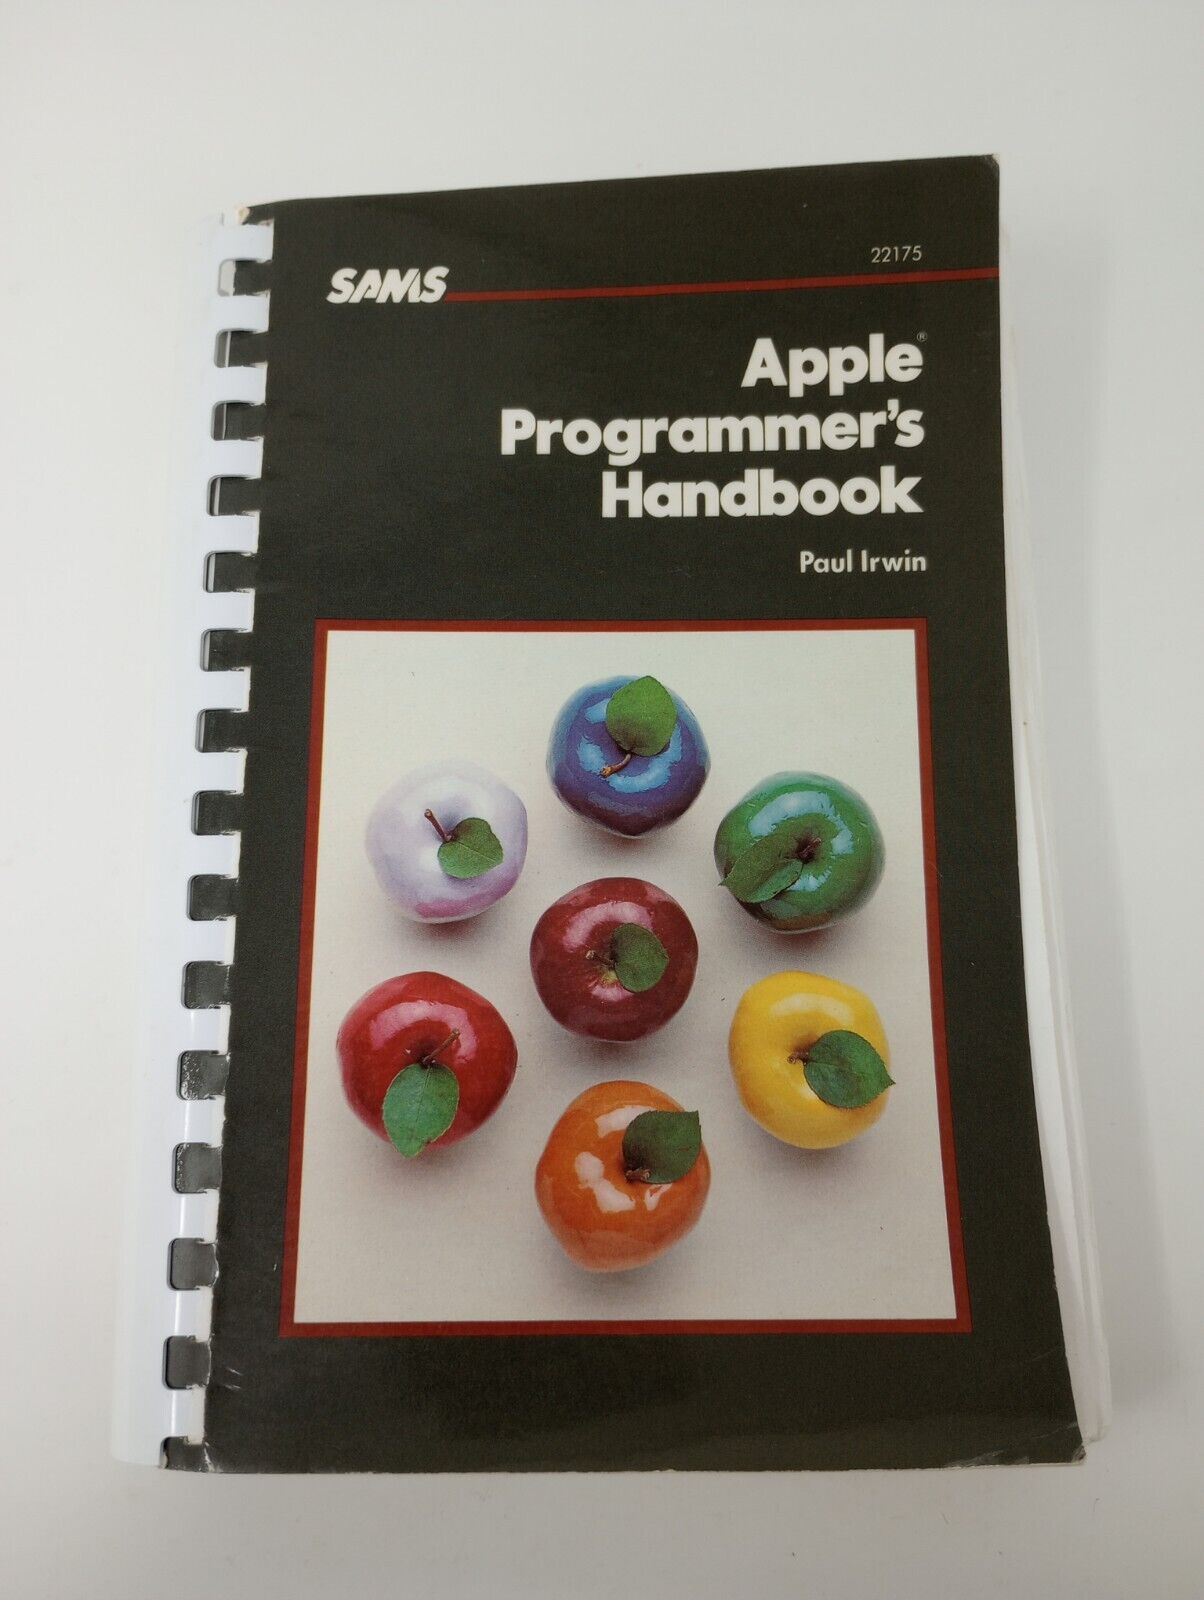 Apple Programmer's Handbook By Paul Irwin (SAMS, 1984) RARE First Edition/Print 